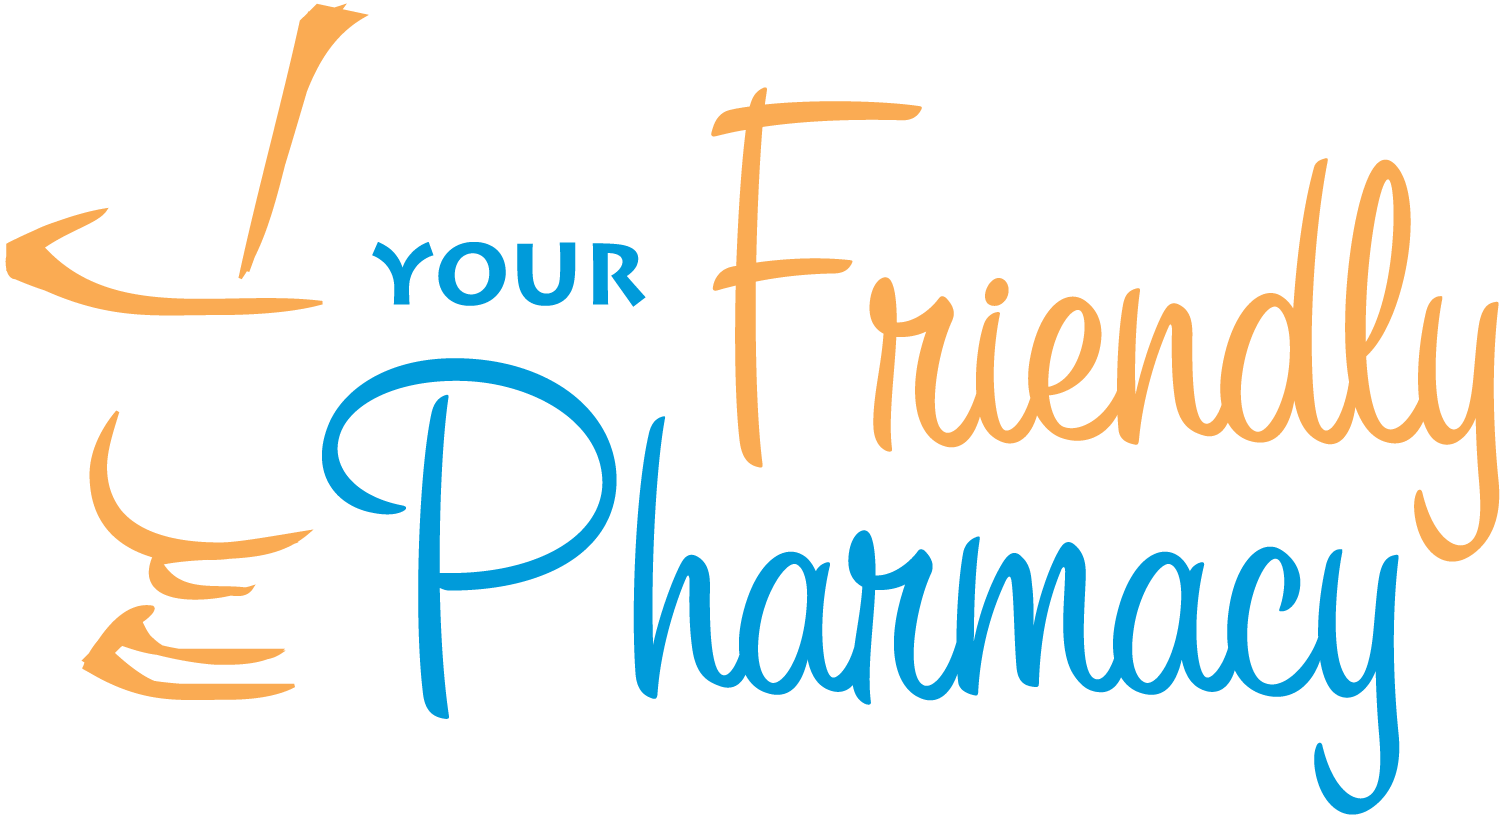 Your Friendly Pharmacy